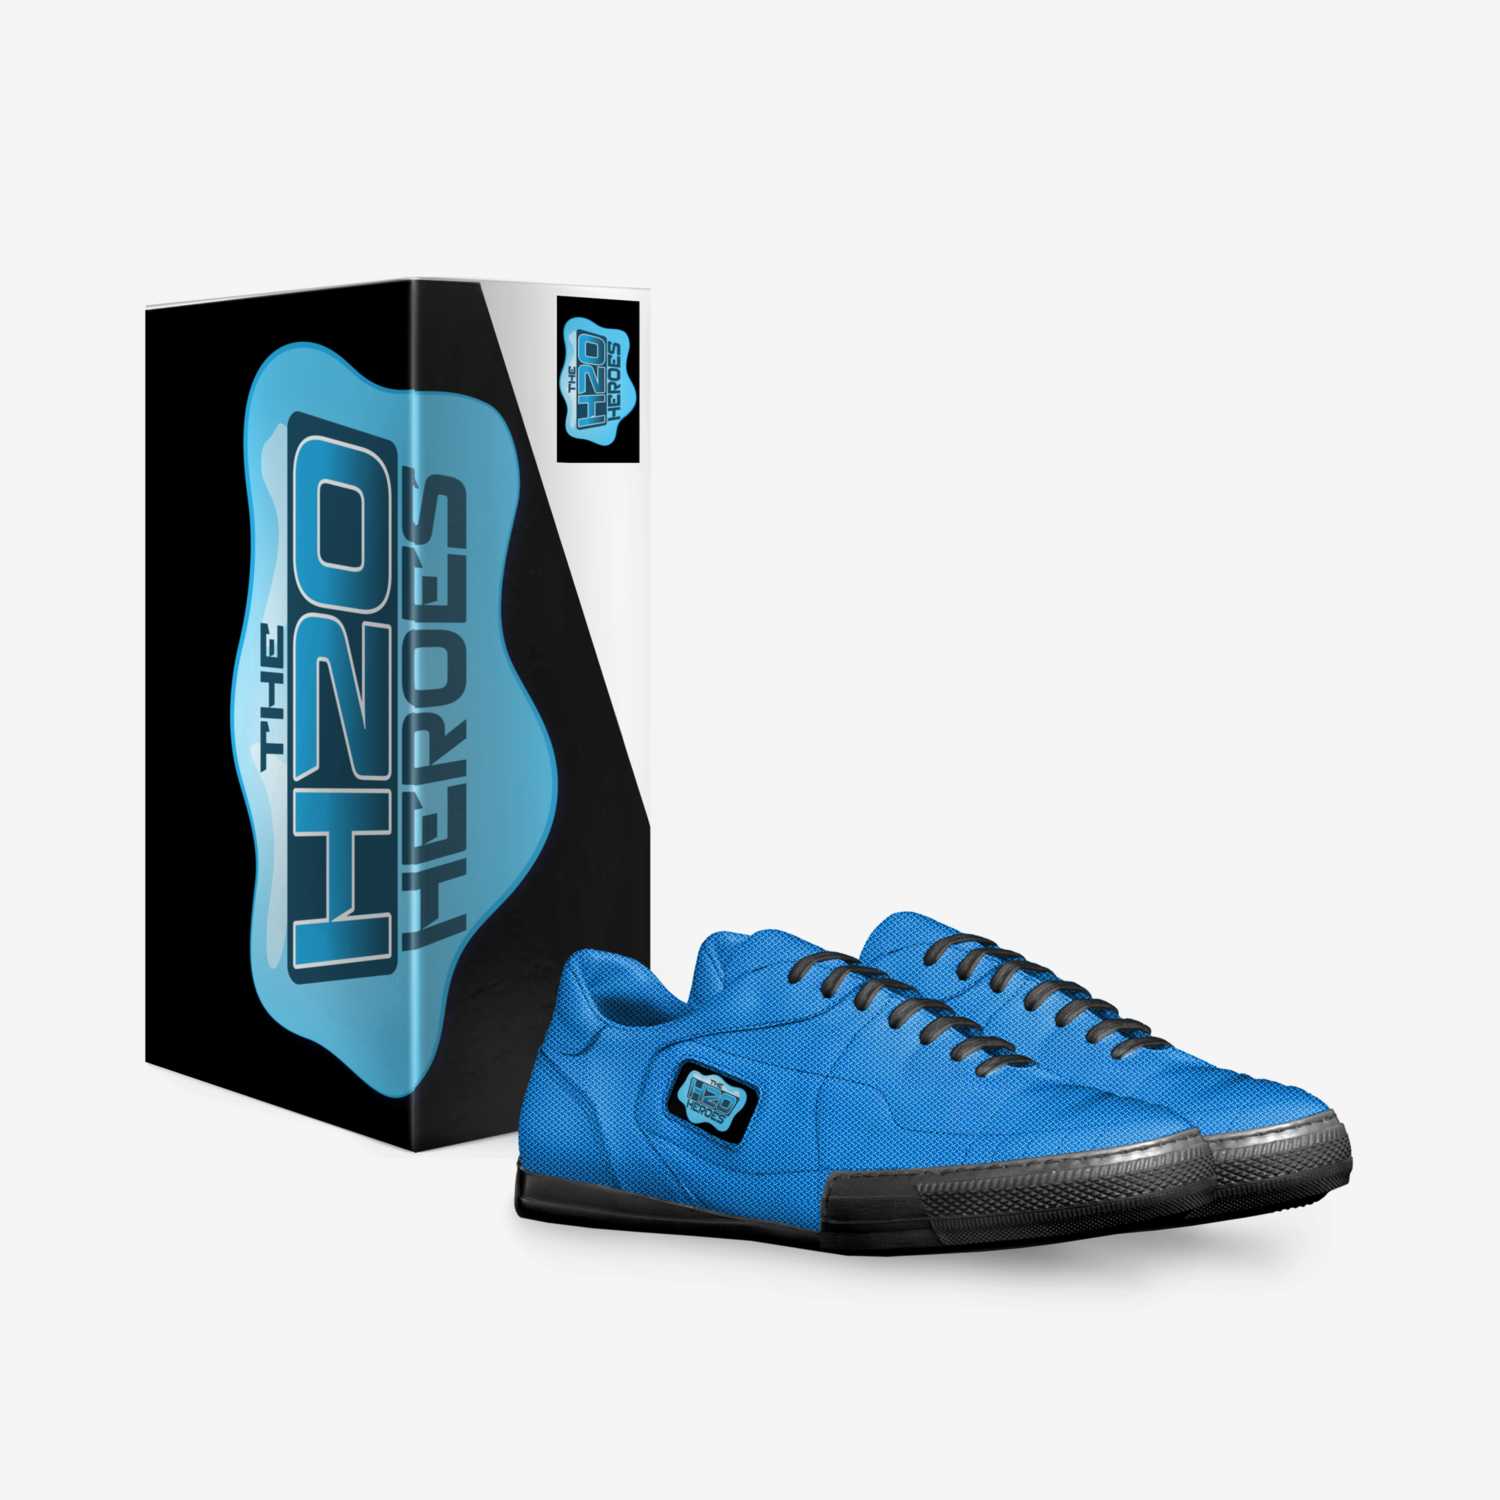 Aquas custom made in Italy shoes by Dan Kelleher | Box view